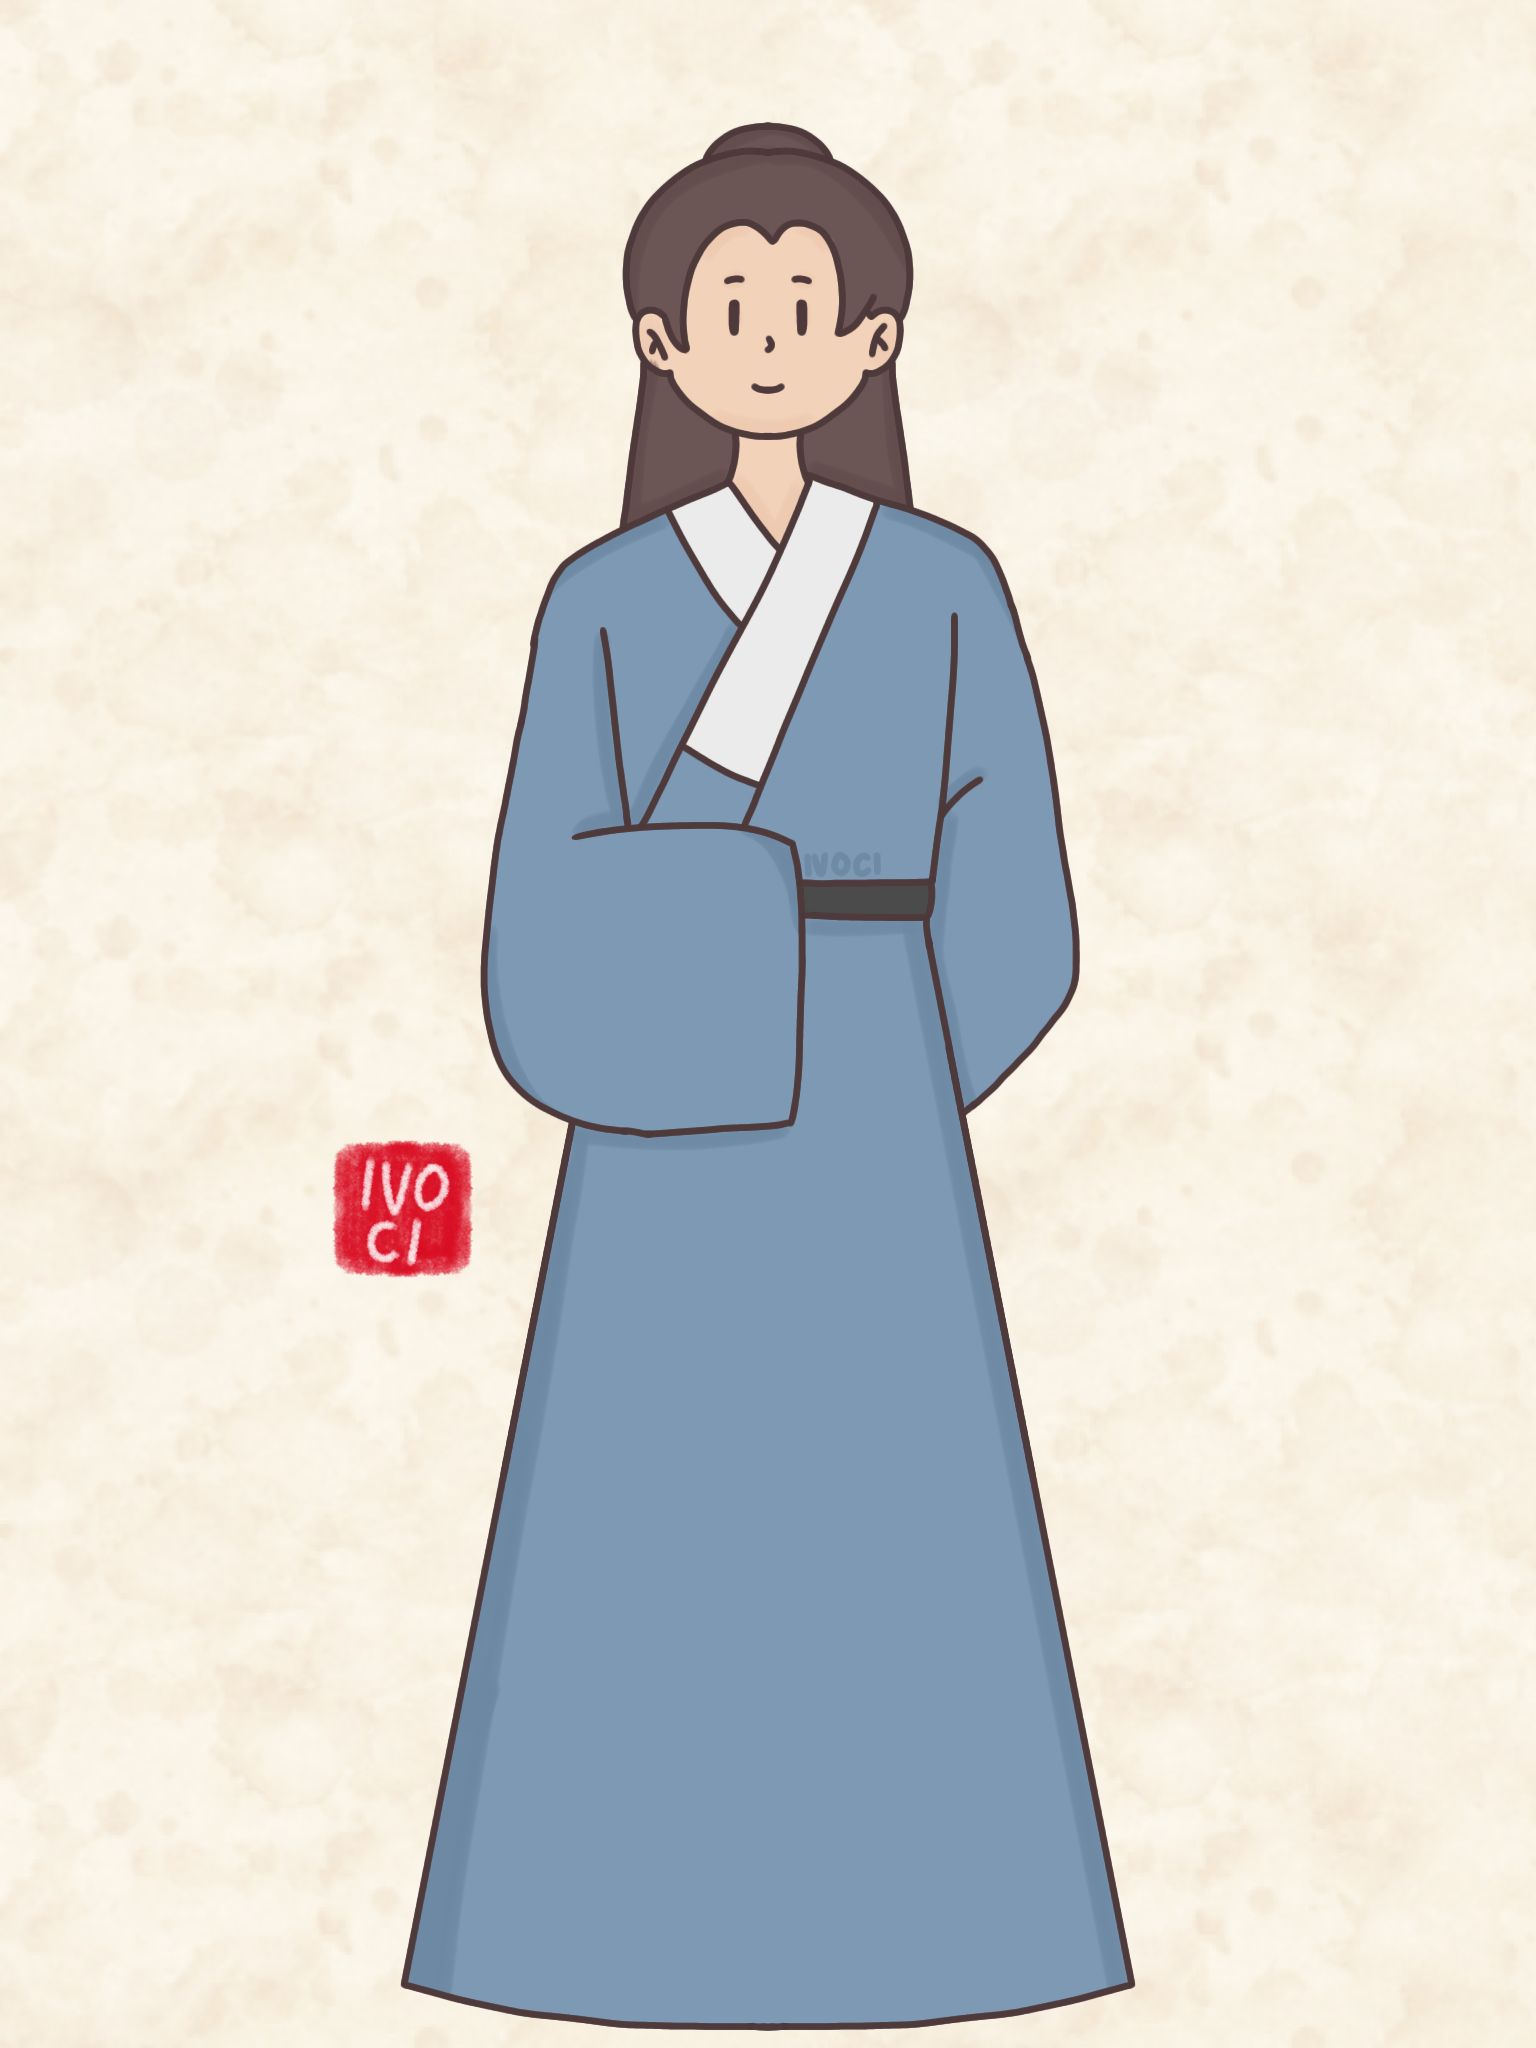 ivoci - Daopao 道袍, Ming Dynasty Style Hanfu Robe - 1